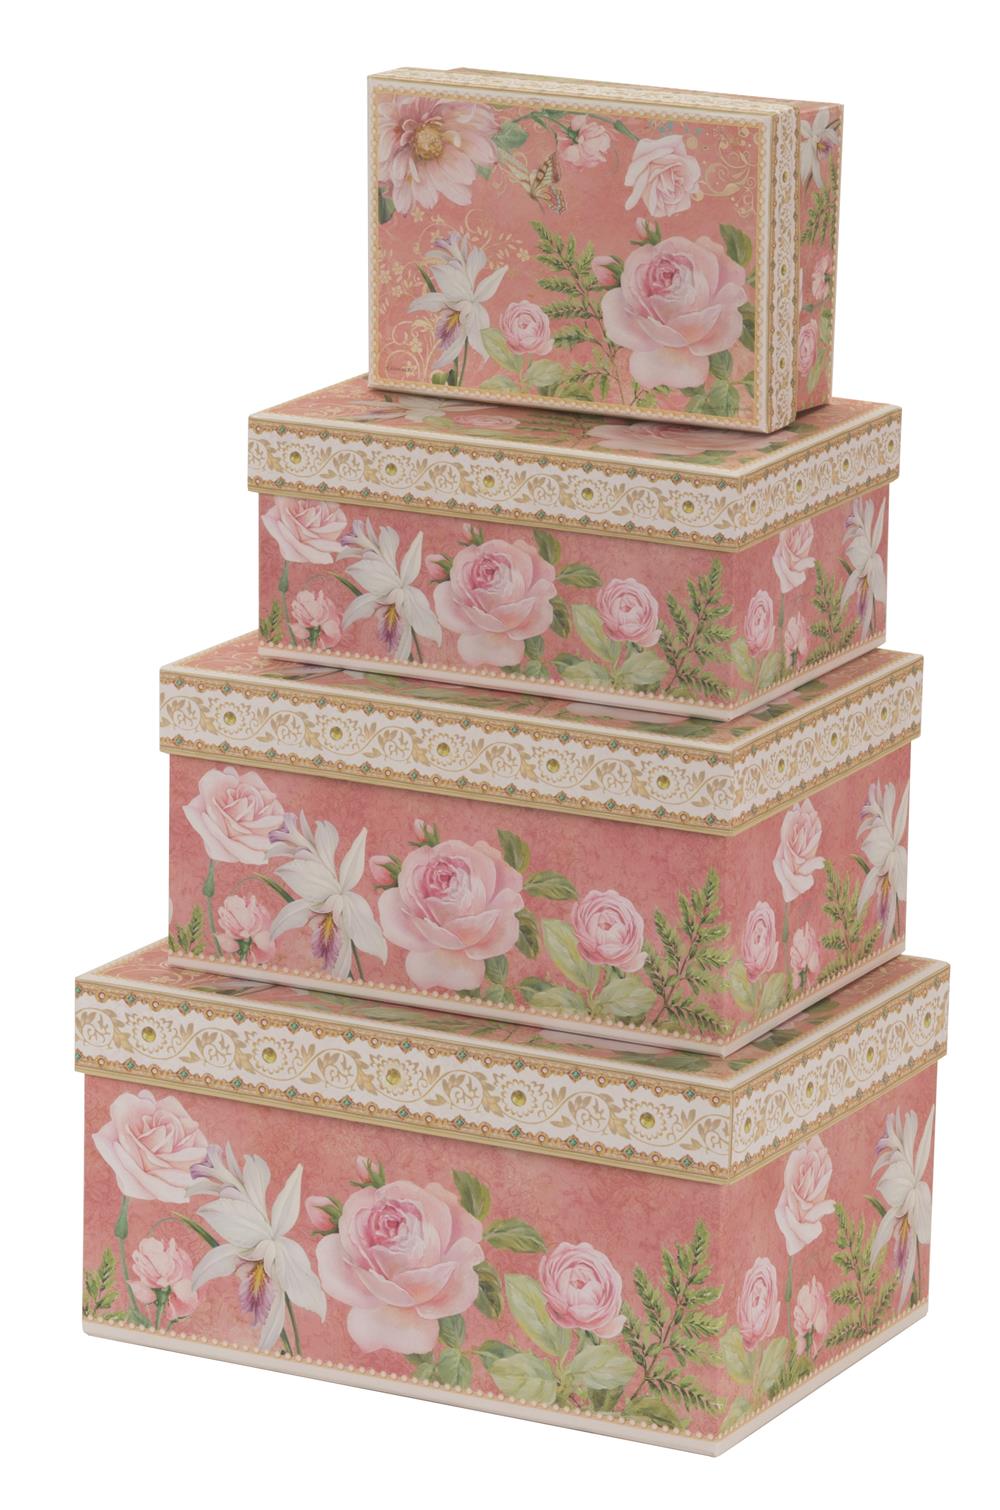 Pink rose design cardboard storage boxes 2 pack